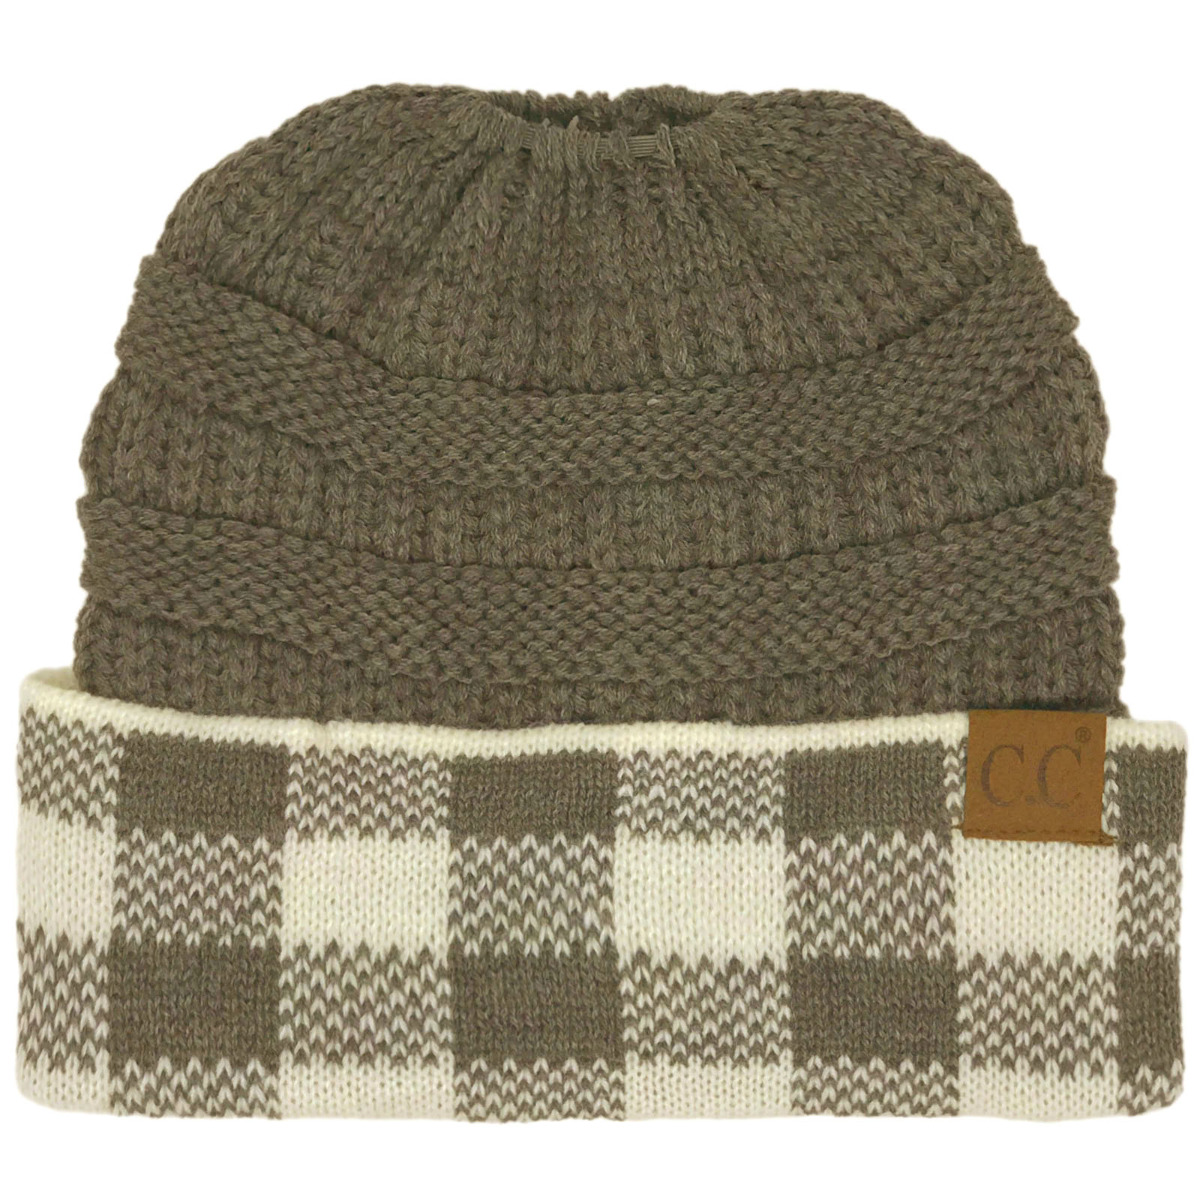 CC Ponytail Messy Bun BeanieTail Soft Winter Knit Stretch Beanie Hat (Buffalo Plaid Dk. Melange Gray/White) - image 2 of 2